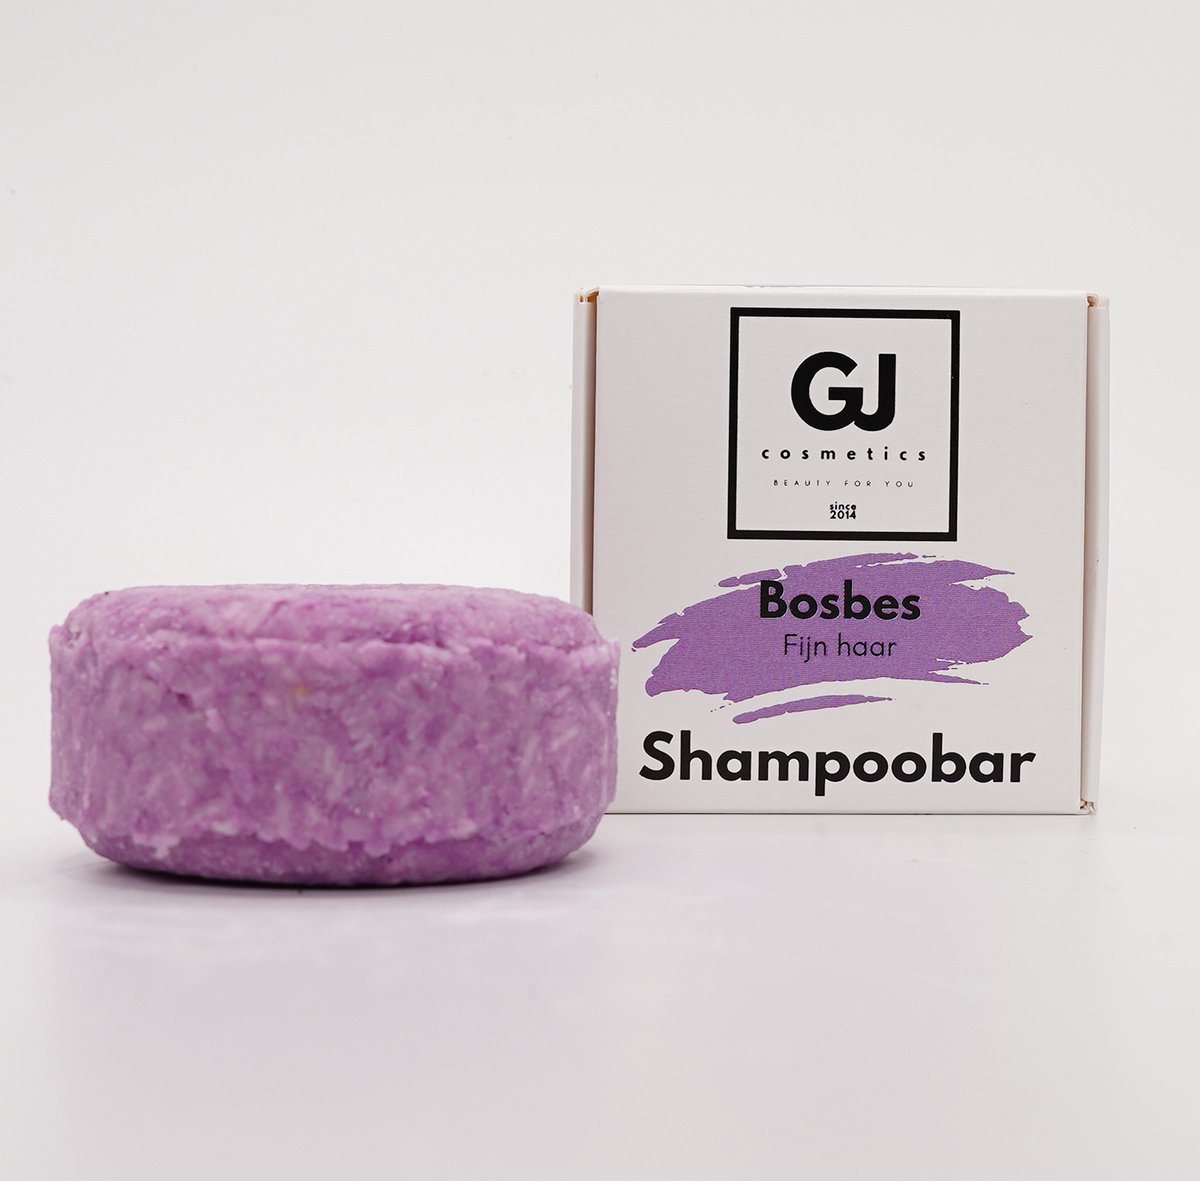 GJ Cosmetics Shampoobar Bosbes